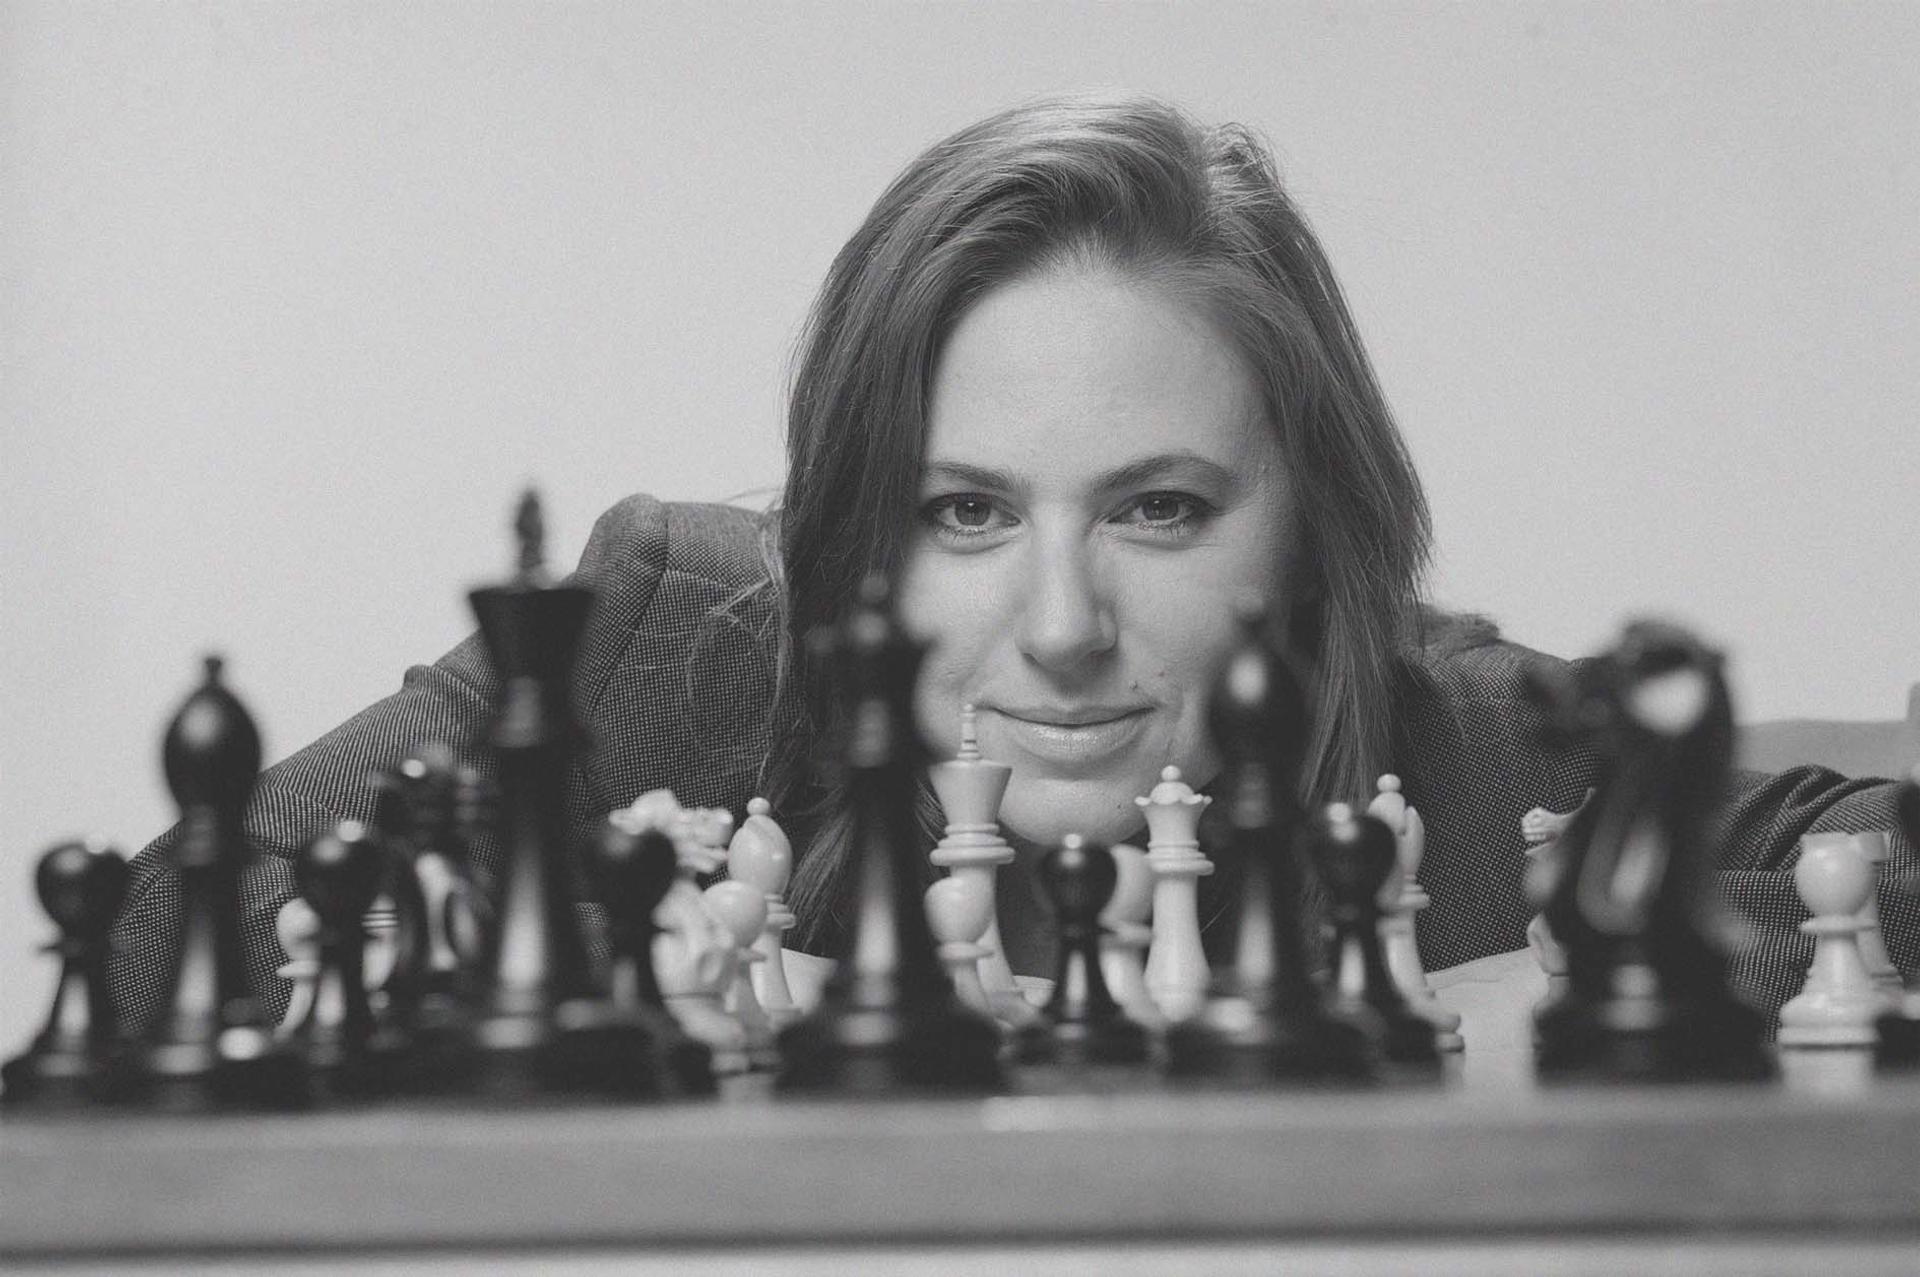 Image courtesy of the Judit Polgár Chess Foundation.